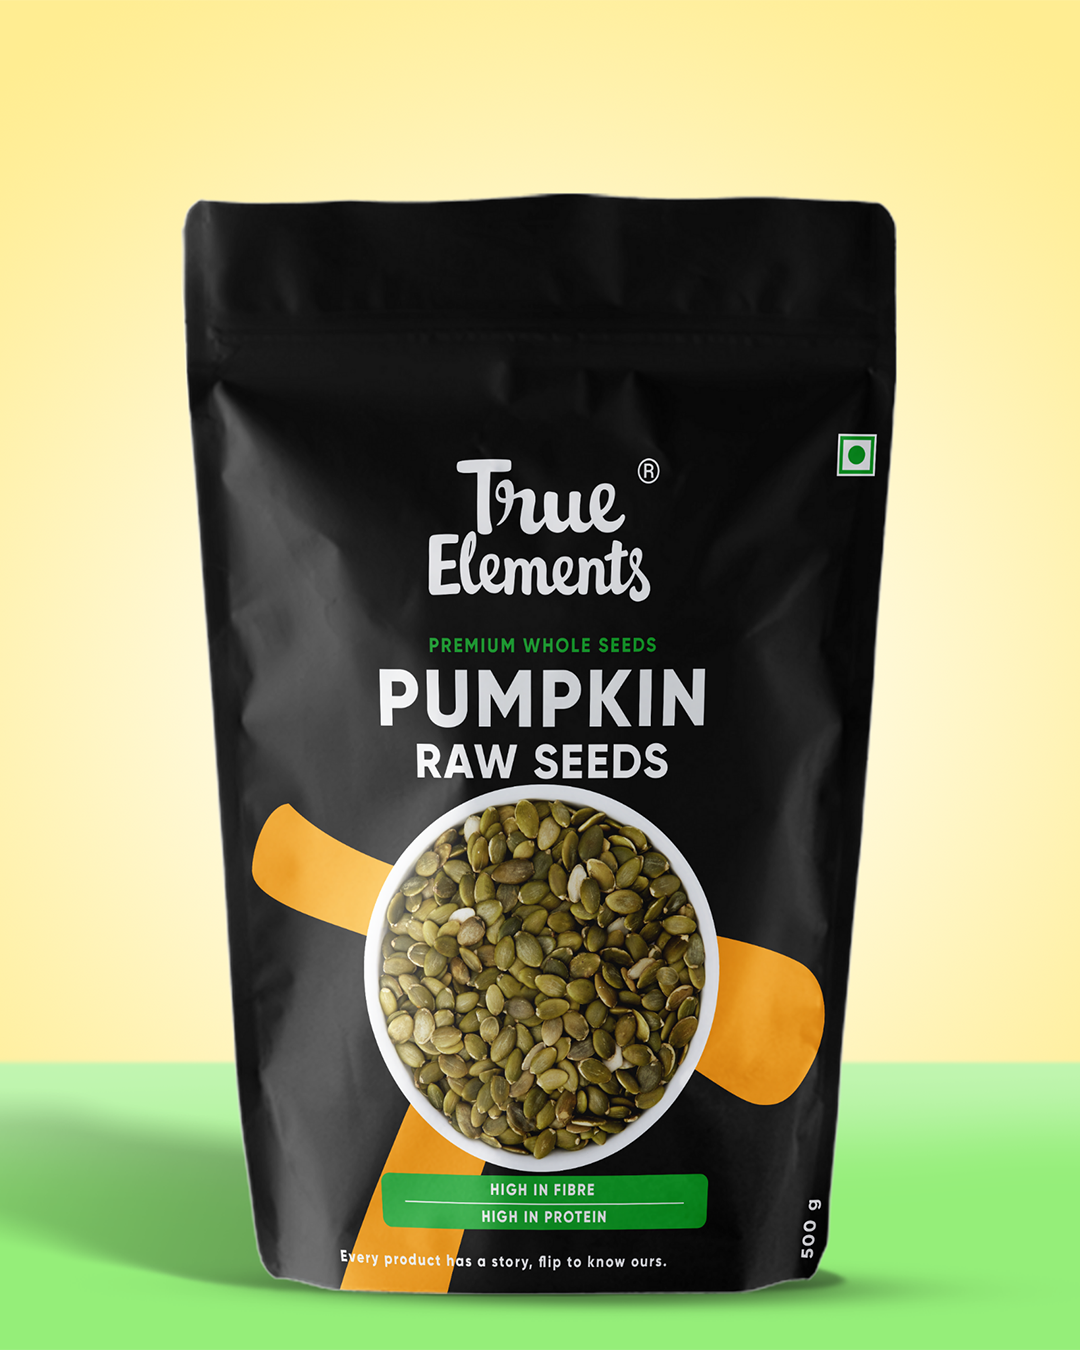 True elements raw pumpkin seeds 500g Pouch (Premium Whole Seeds)